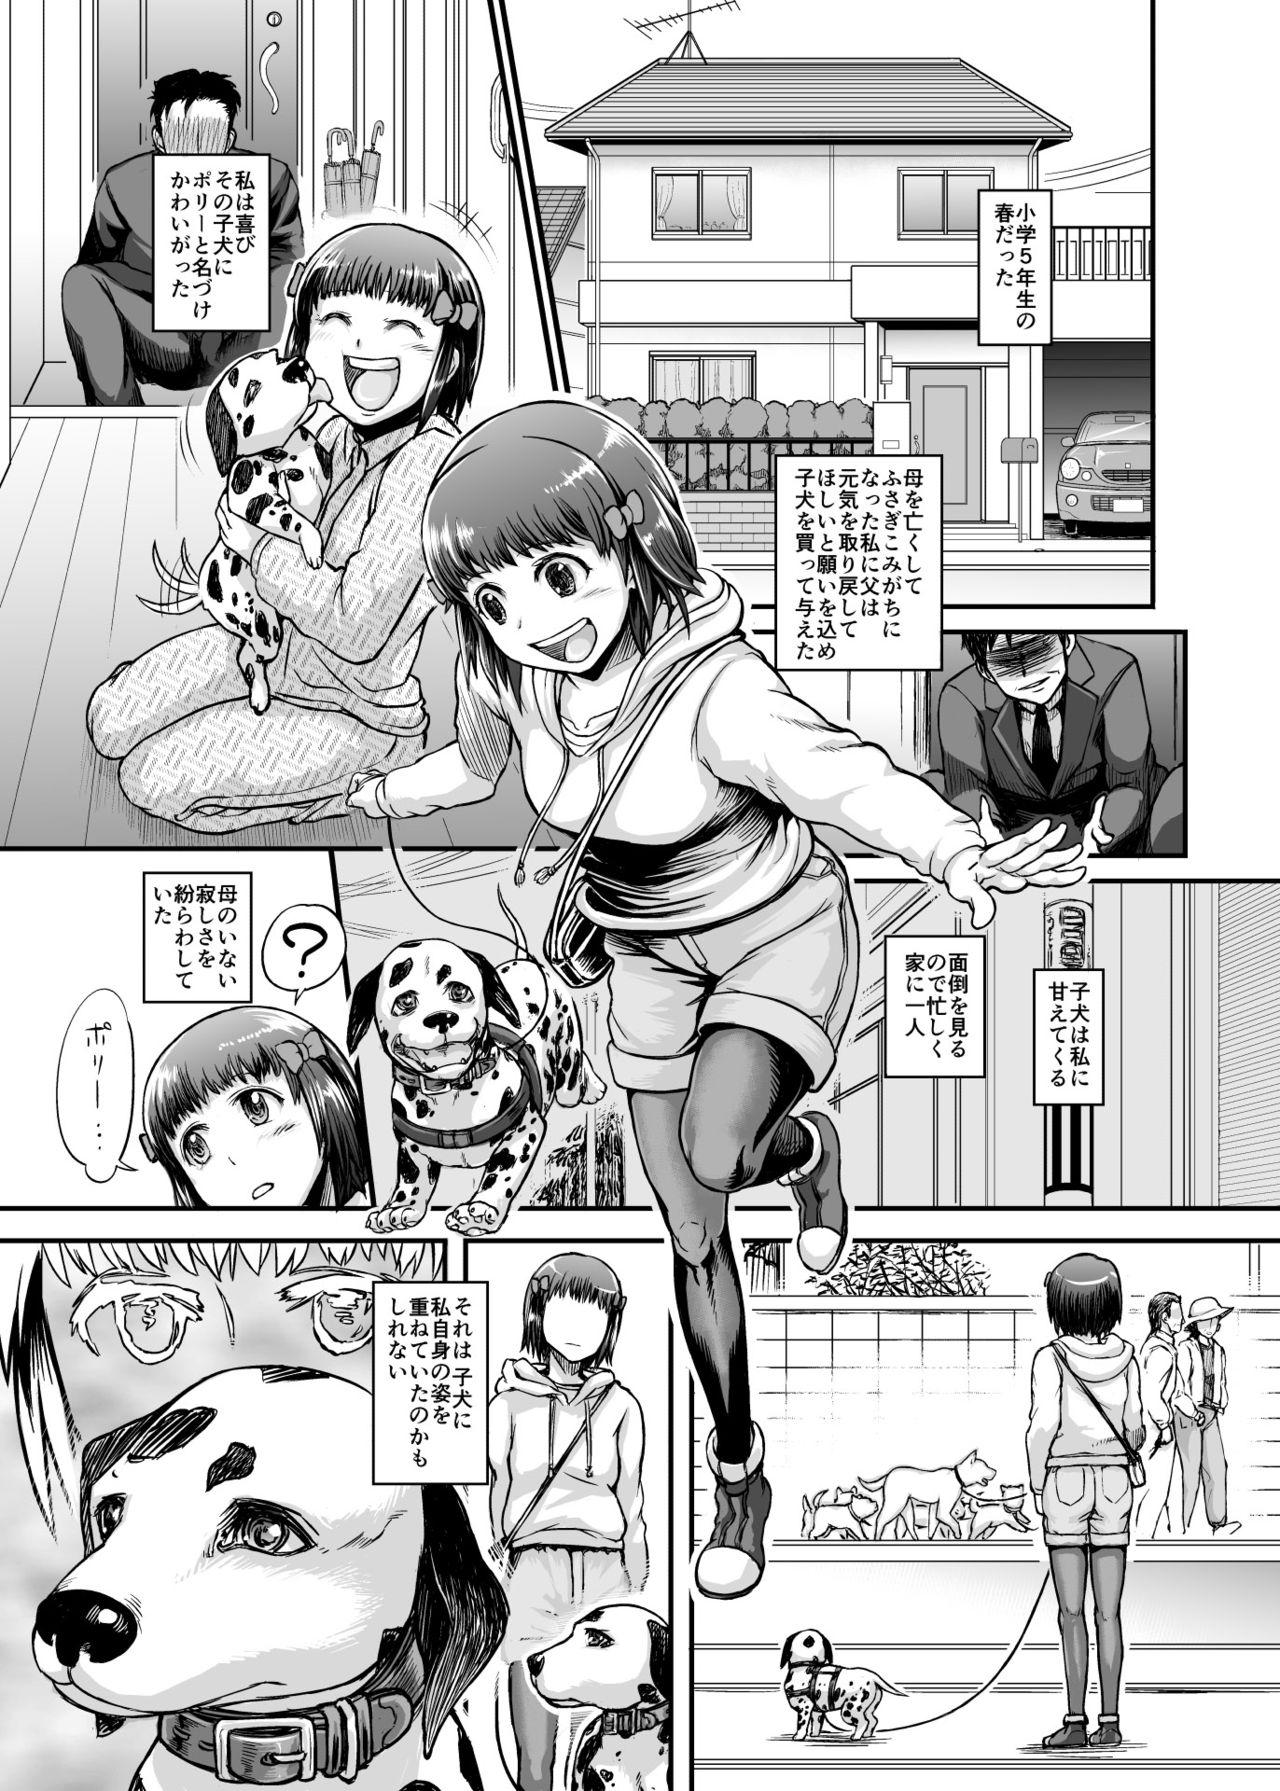 Hentai with dog